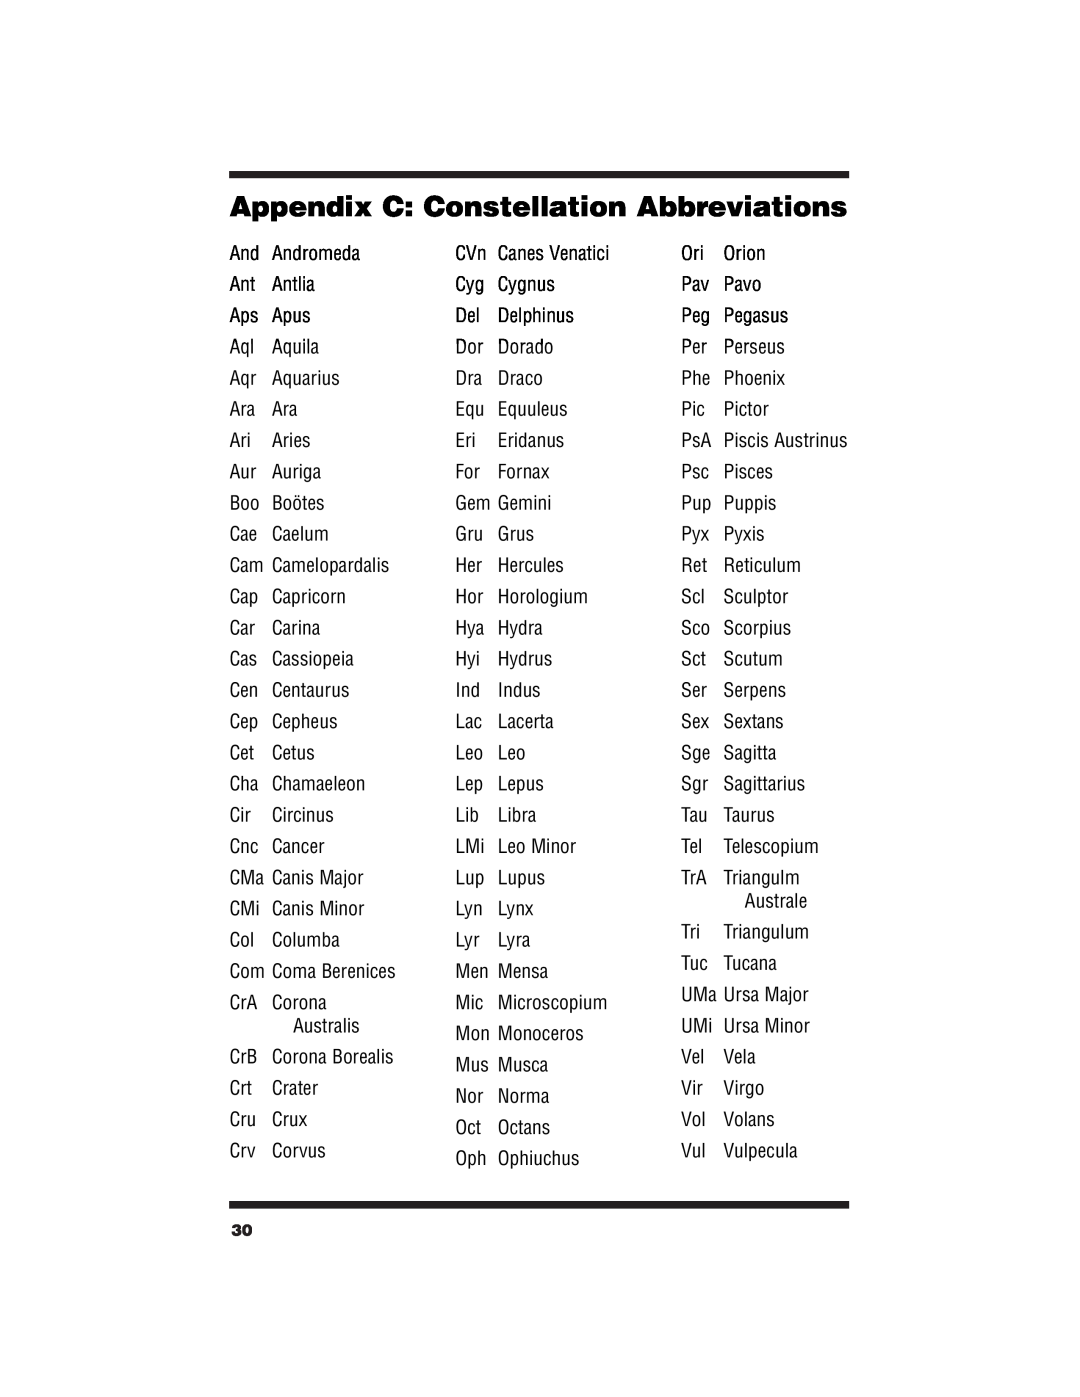 Orion 7880 instruction manual Appendix C Constellation Abbreviations, Microscopium 